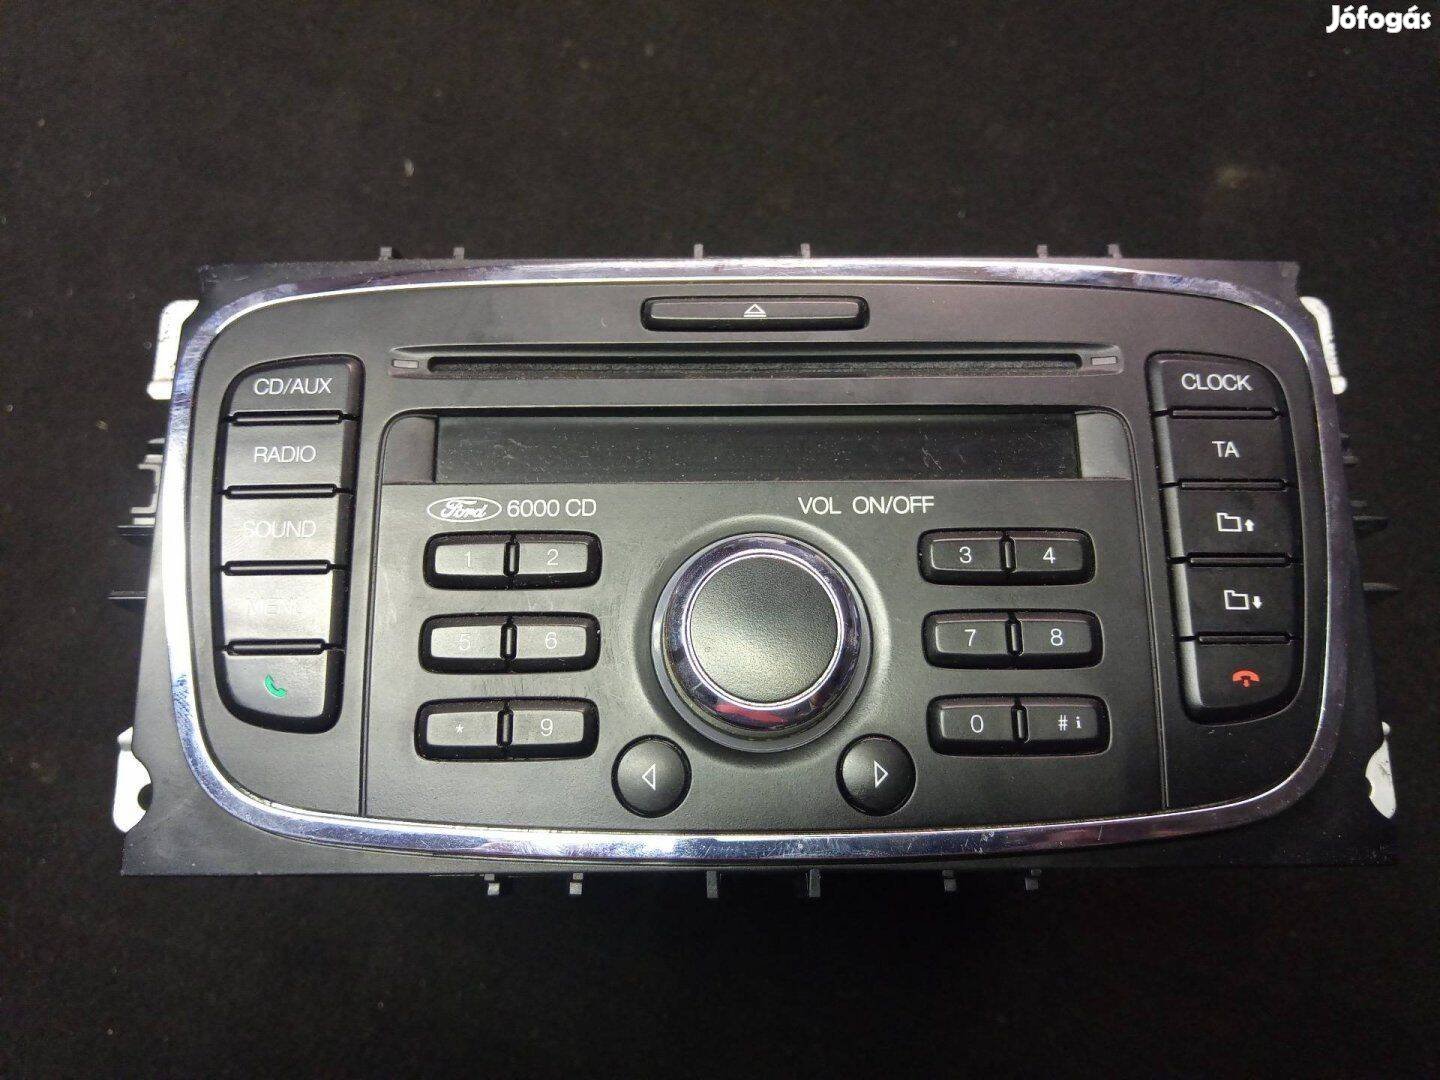 Eladó Ford focus MK3 CD 6000 rádió MP3